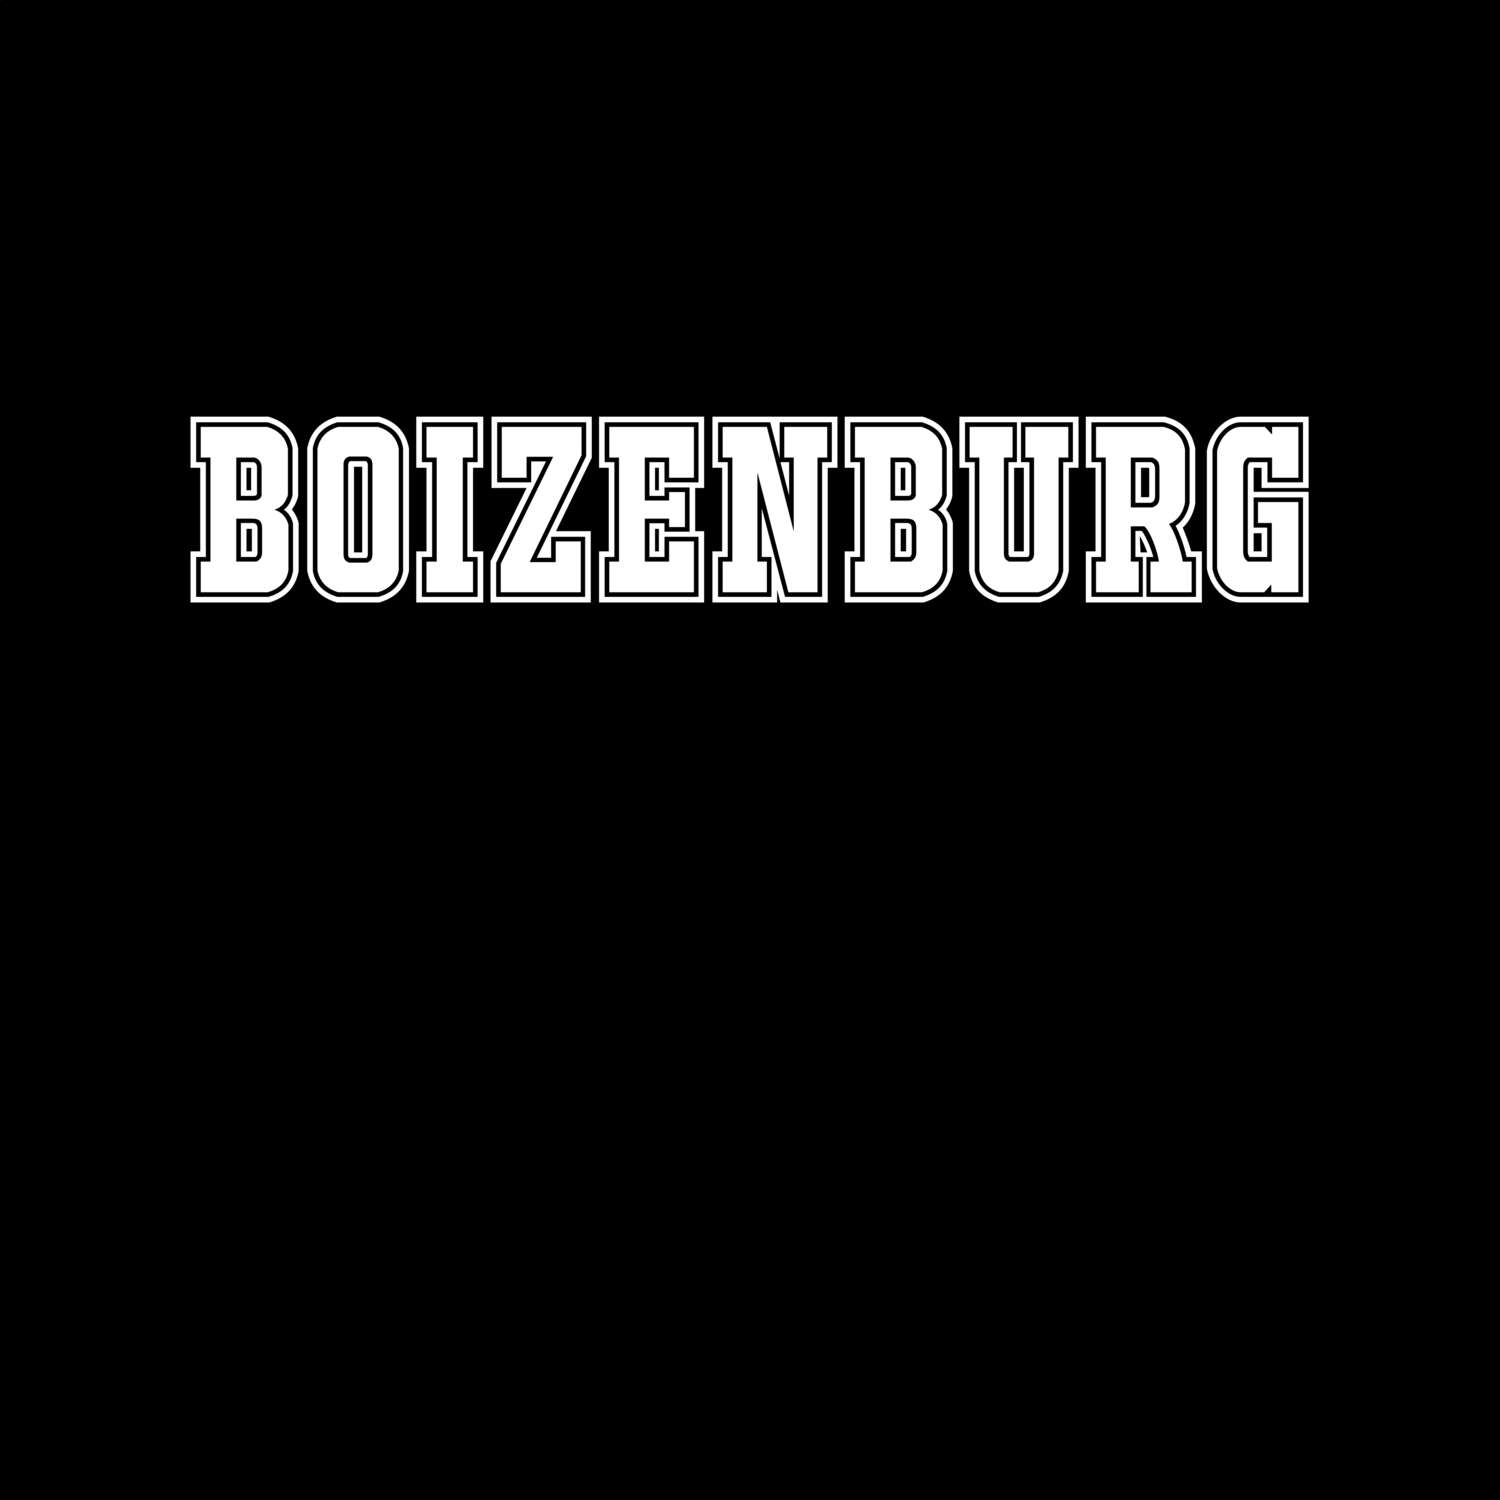 Boizenburg T-Shirt »Classic«